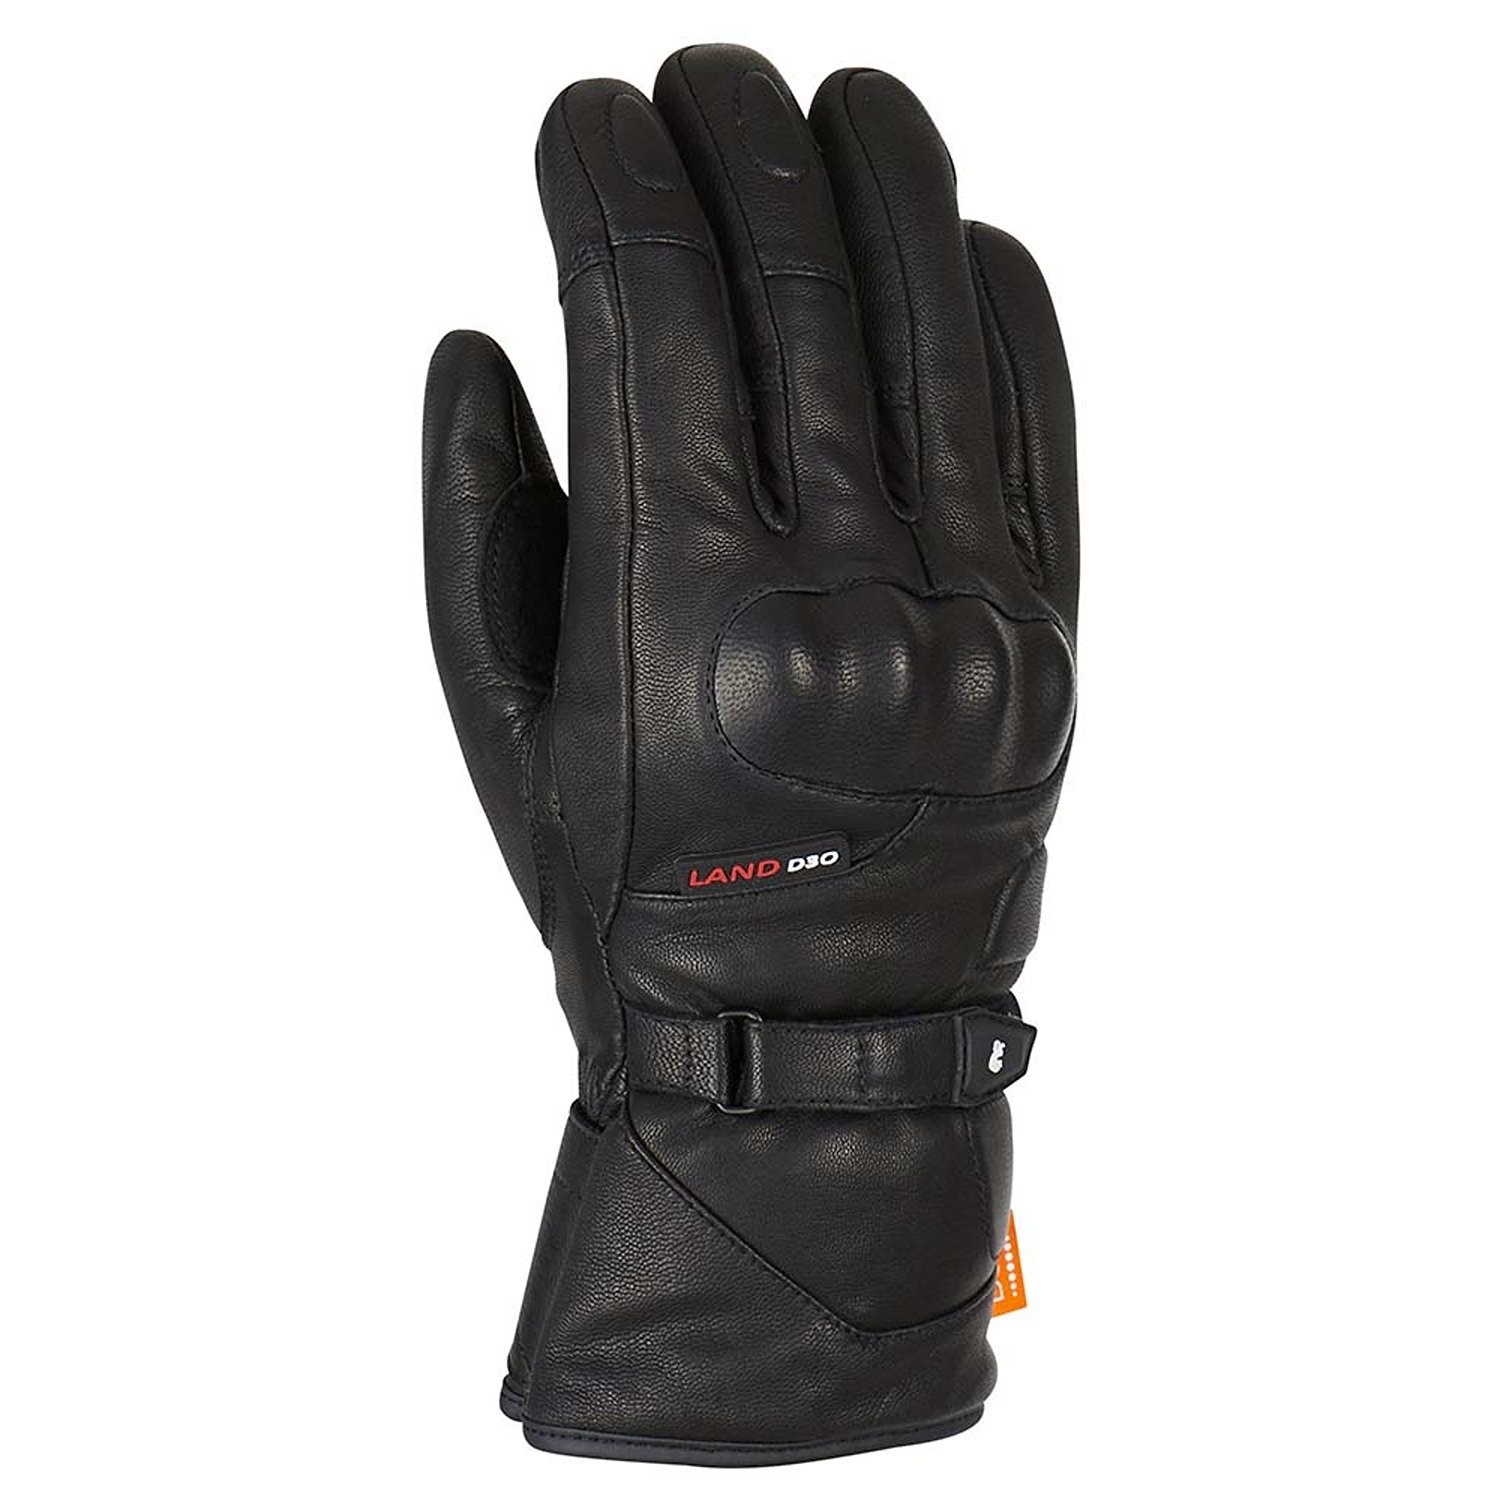 Image of Furygan Land DK D30 Gloves Black Talla 2XL